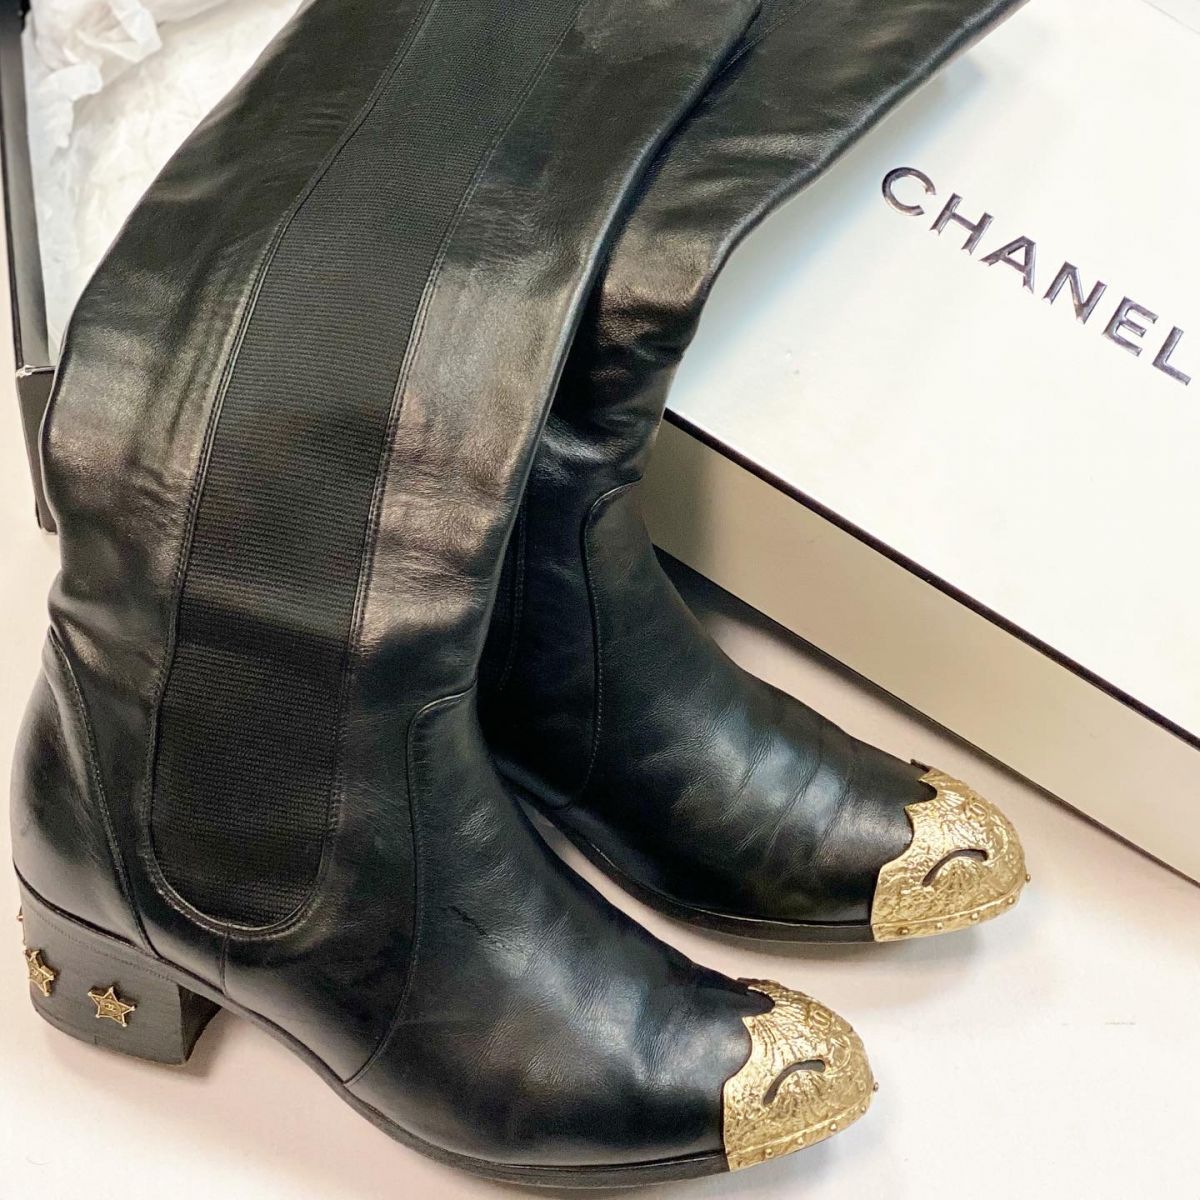 Сапоги Chanel размер 40 цена 30 770 руб 